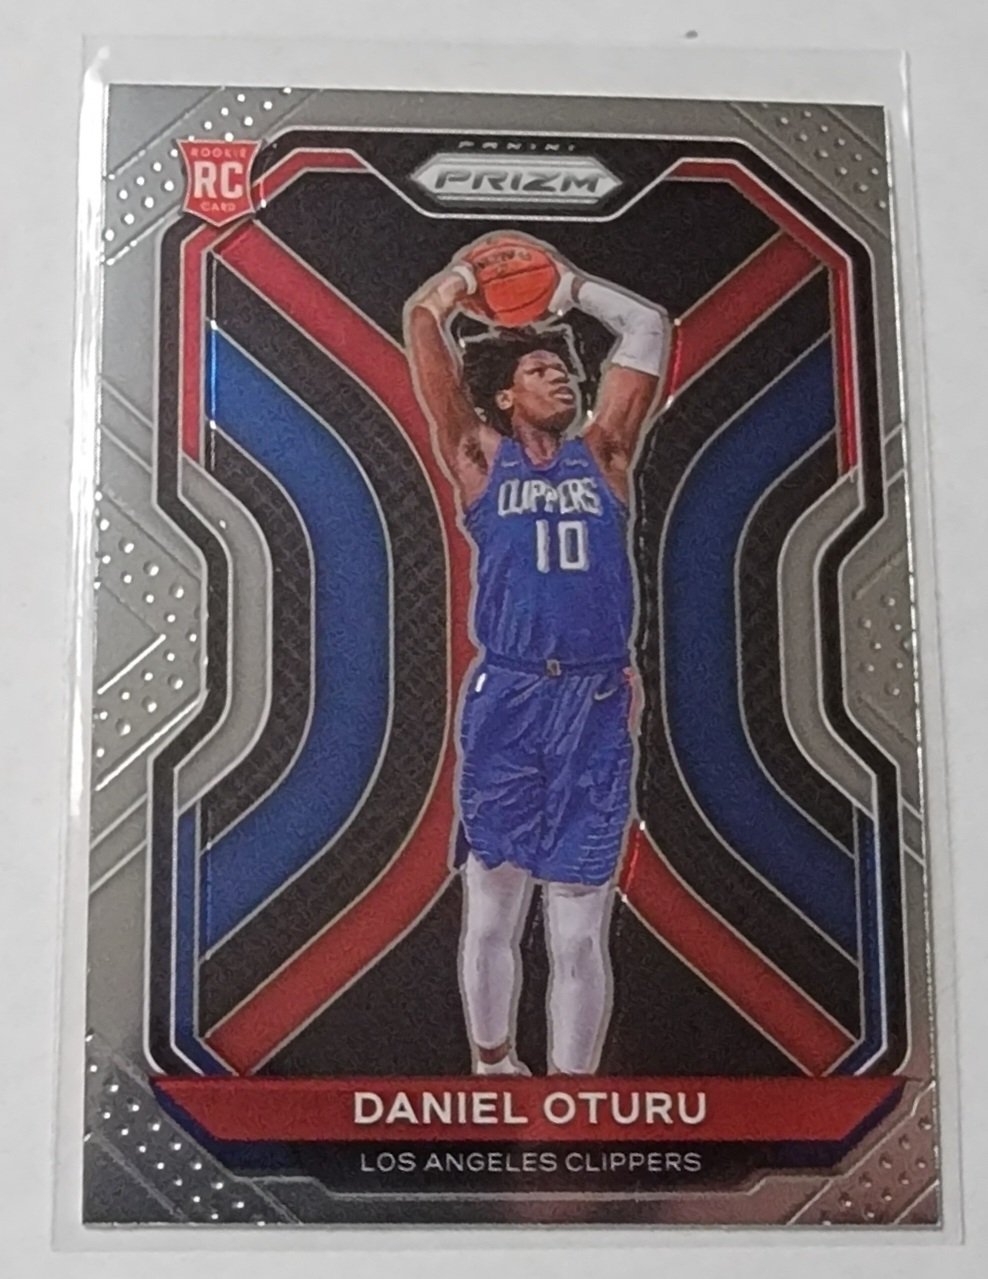 2020-21 Panini Prizm Daniel Oturu Rookie Basketball Card AVM1 simple Xclusive Collectibles   